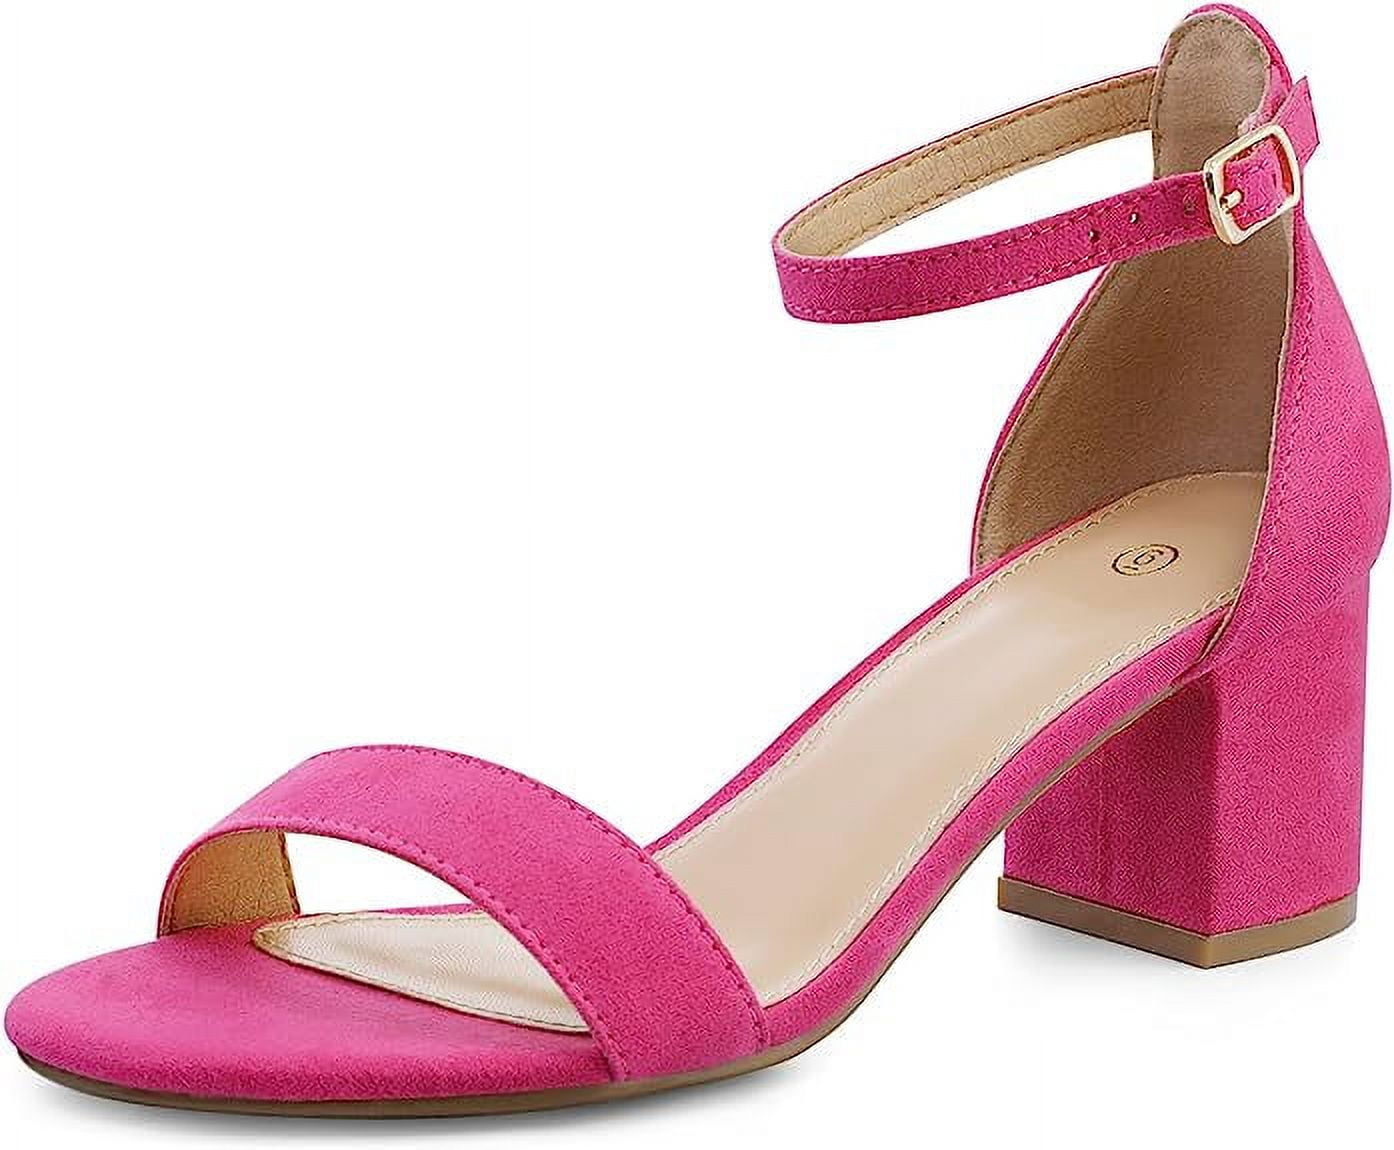 Cagole High Heel Sandals Fluorescent Pink | The Webster